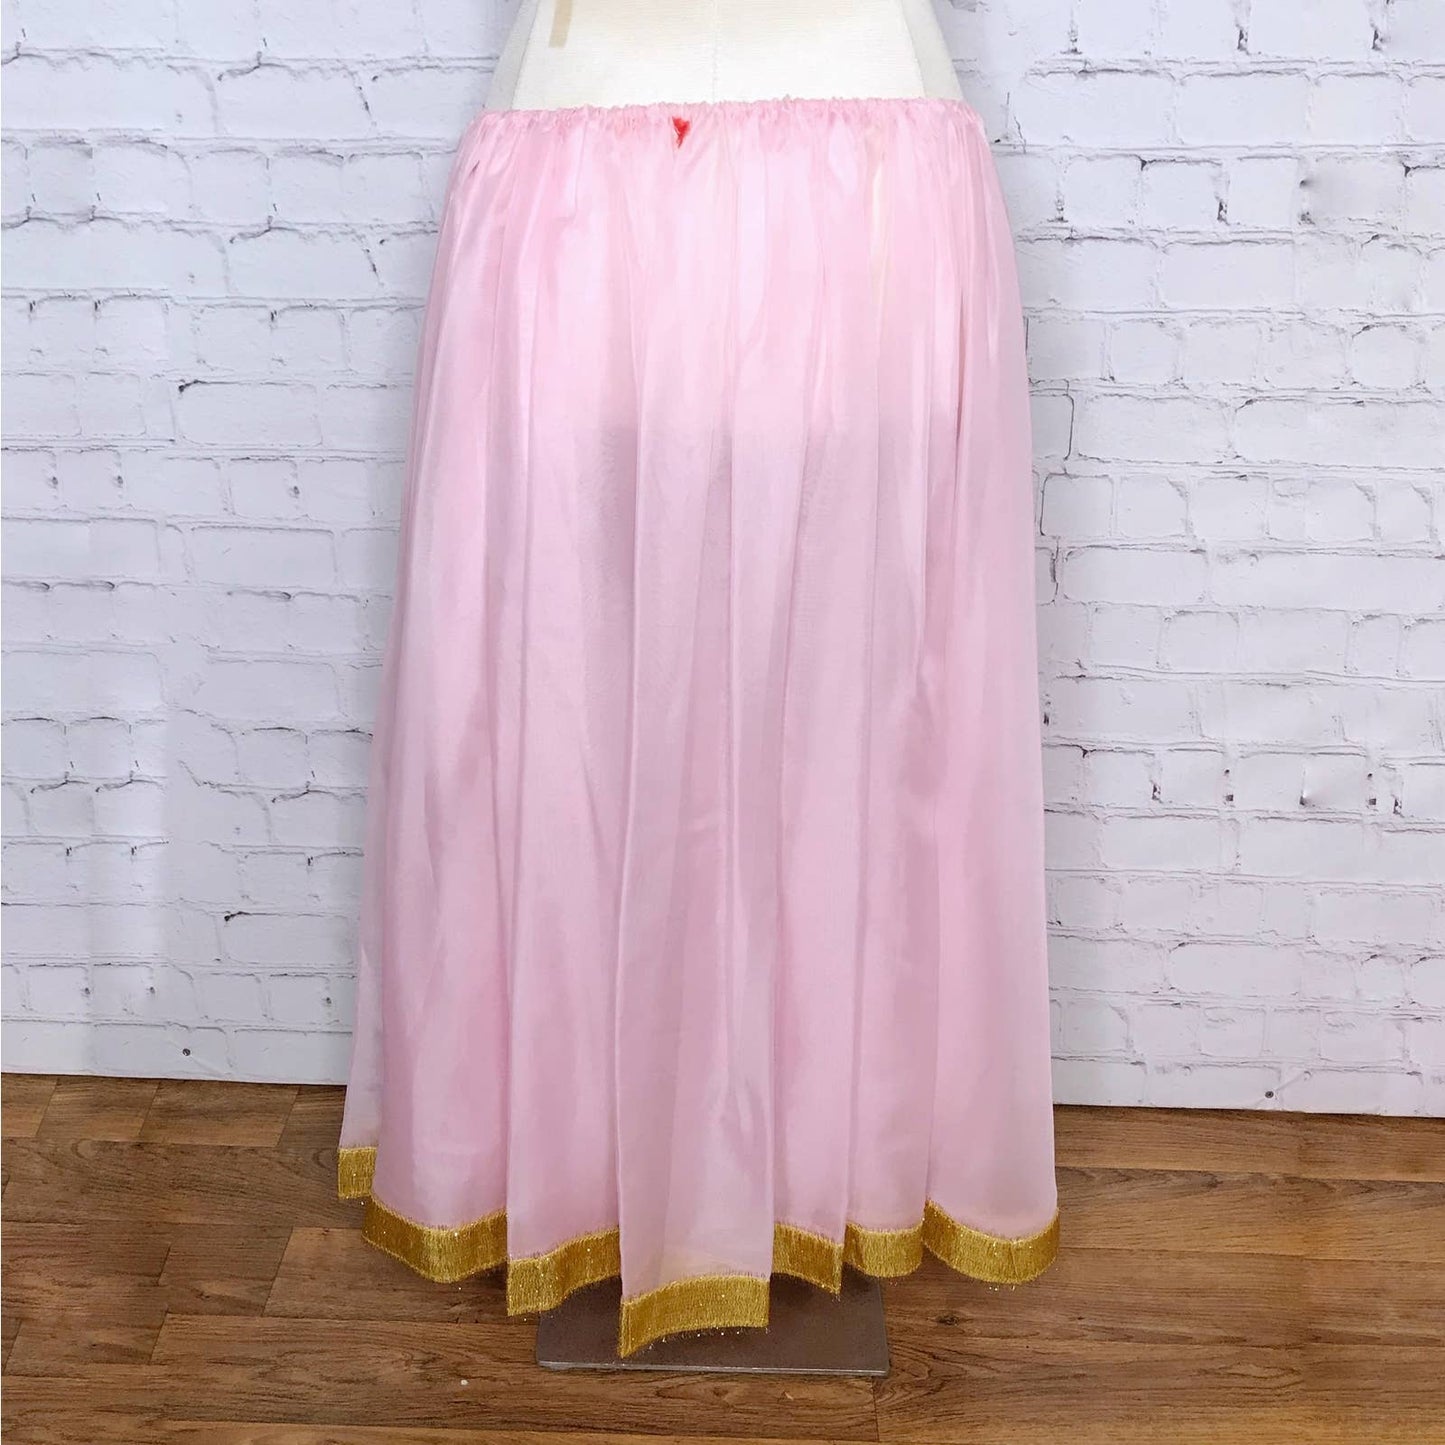 Vintage 80s Pink Chiffon Belly Dance Skirt Gold Metallic Trim Handmade One Size